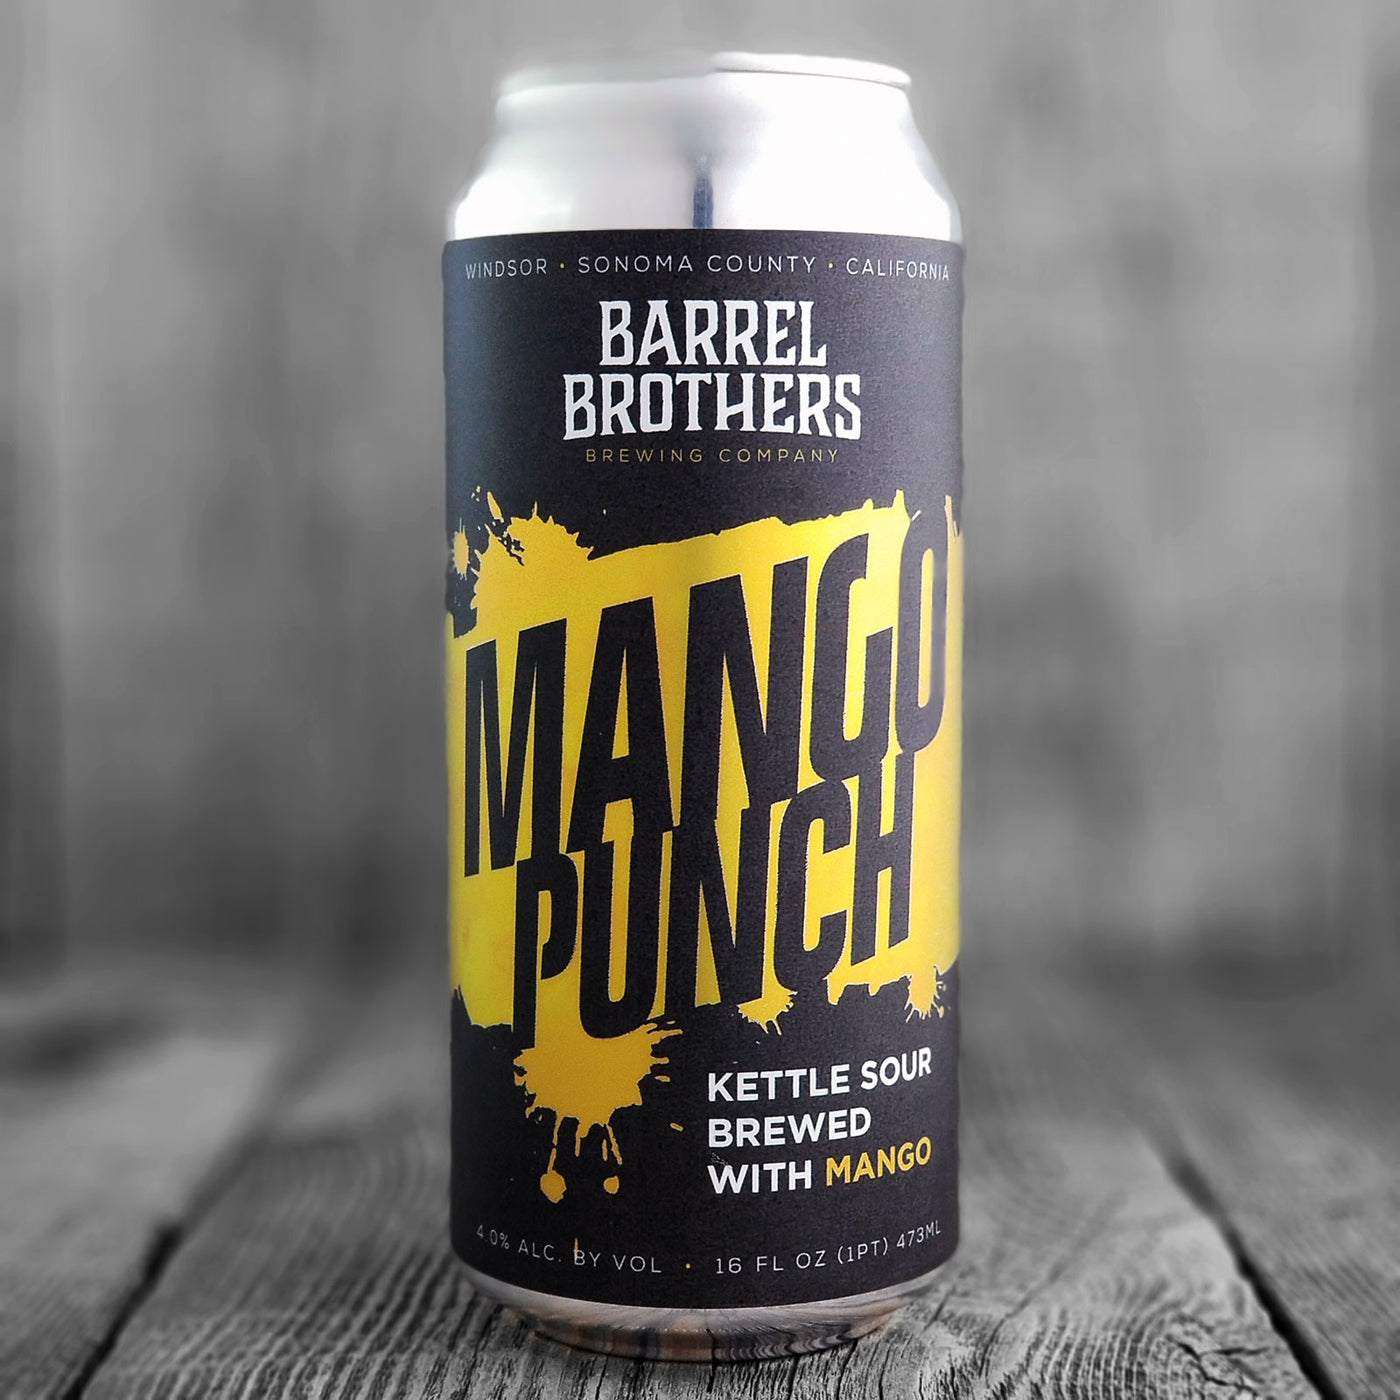 Barrel Brothers Mango Punch